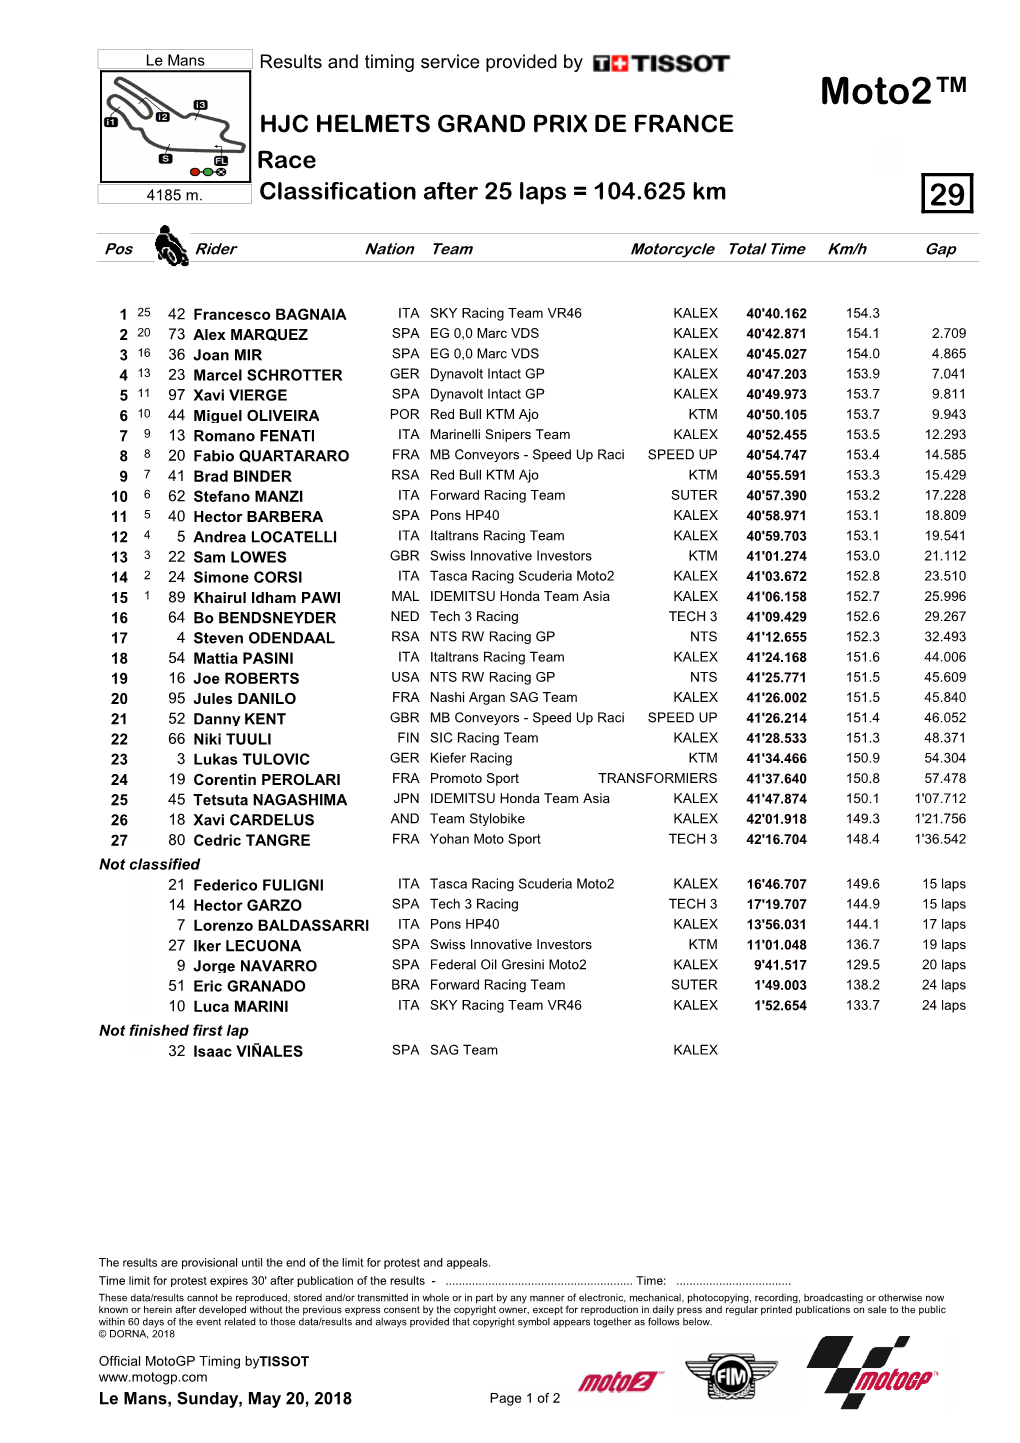 Moto2™ HJC HELMETS GRAND PRIX DE FRANCE Race 4185 M